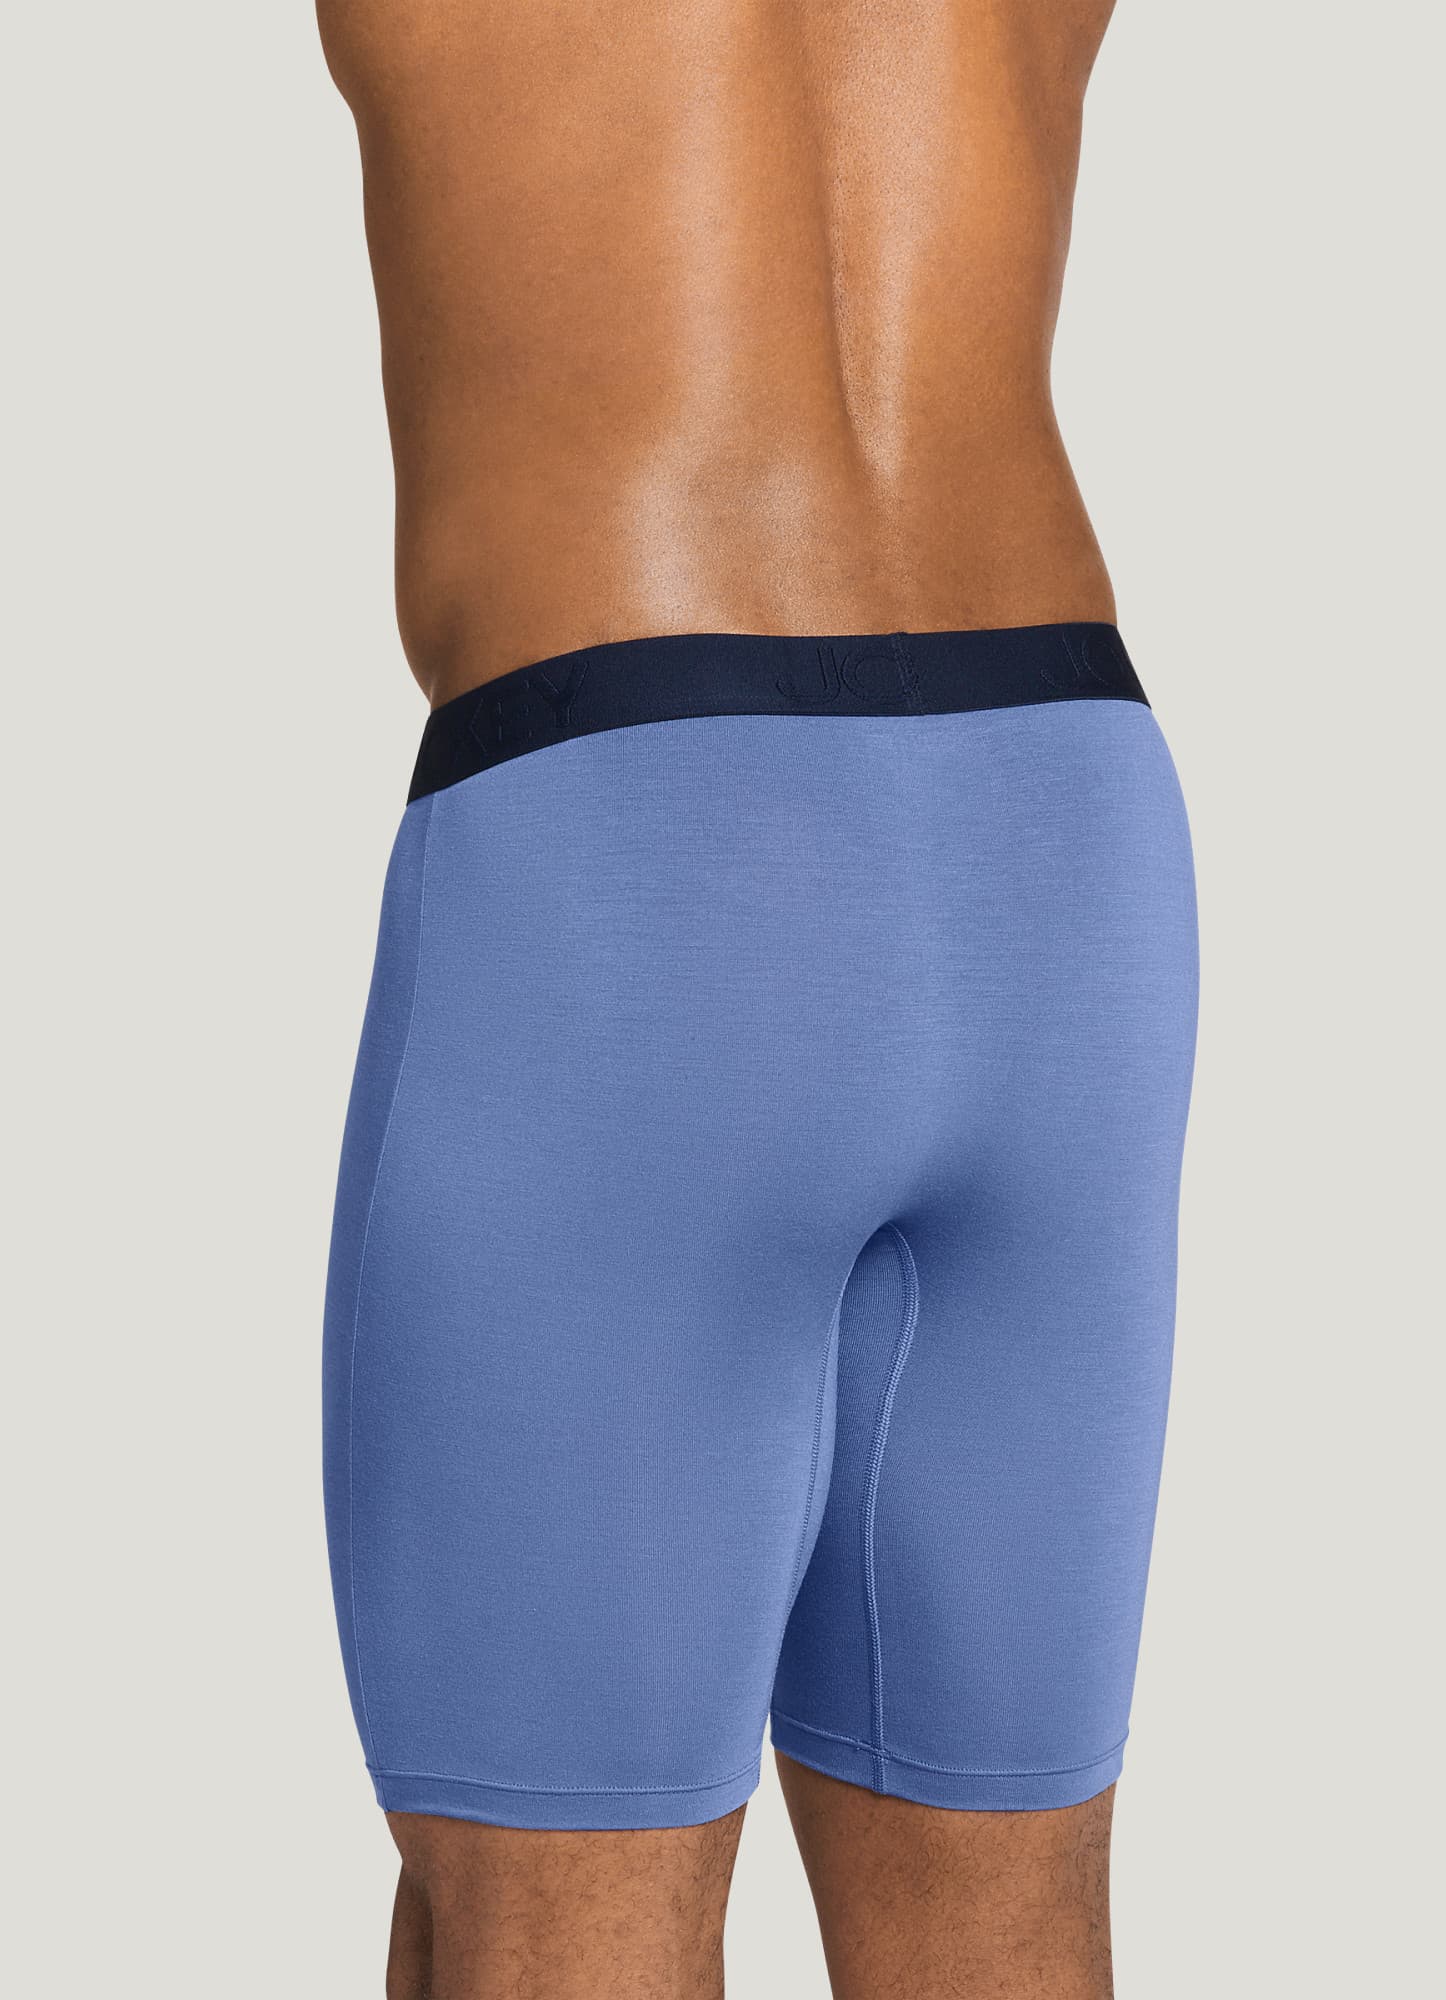 Modal Lite Extra Soft Boxer Cut Men's Underwear (2-pack) – More